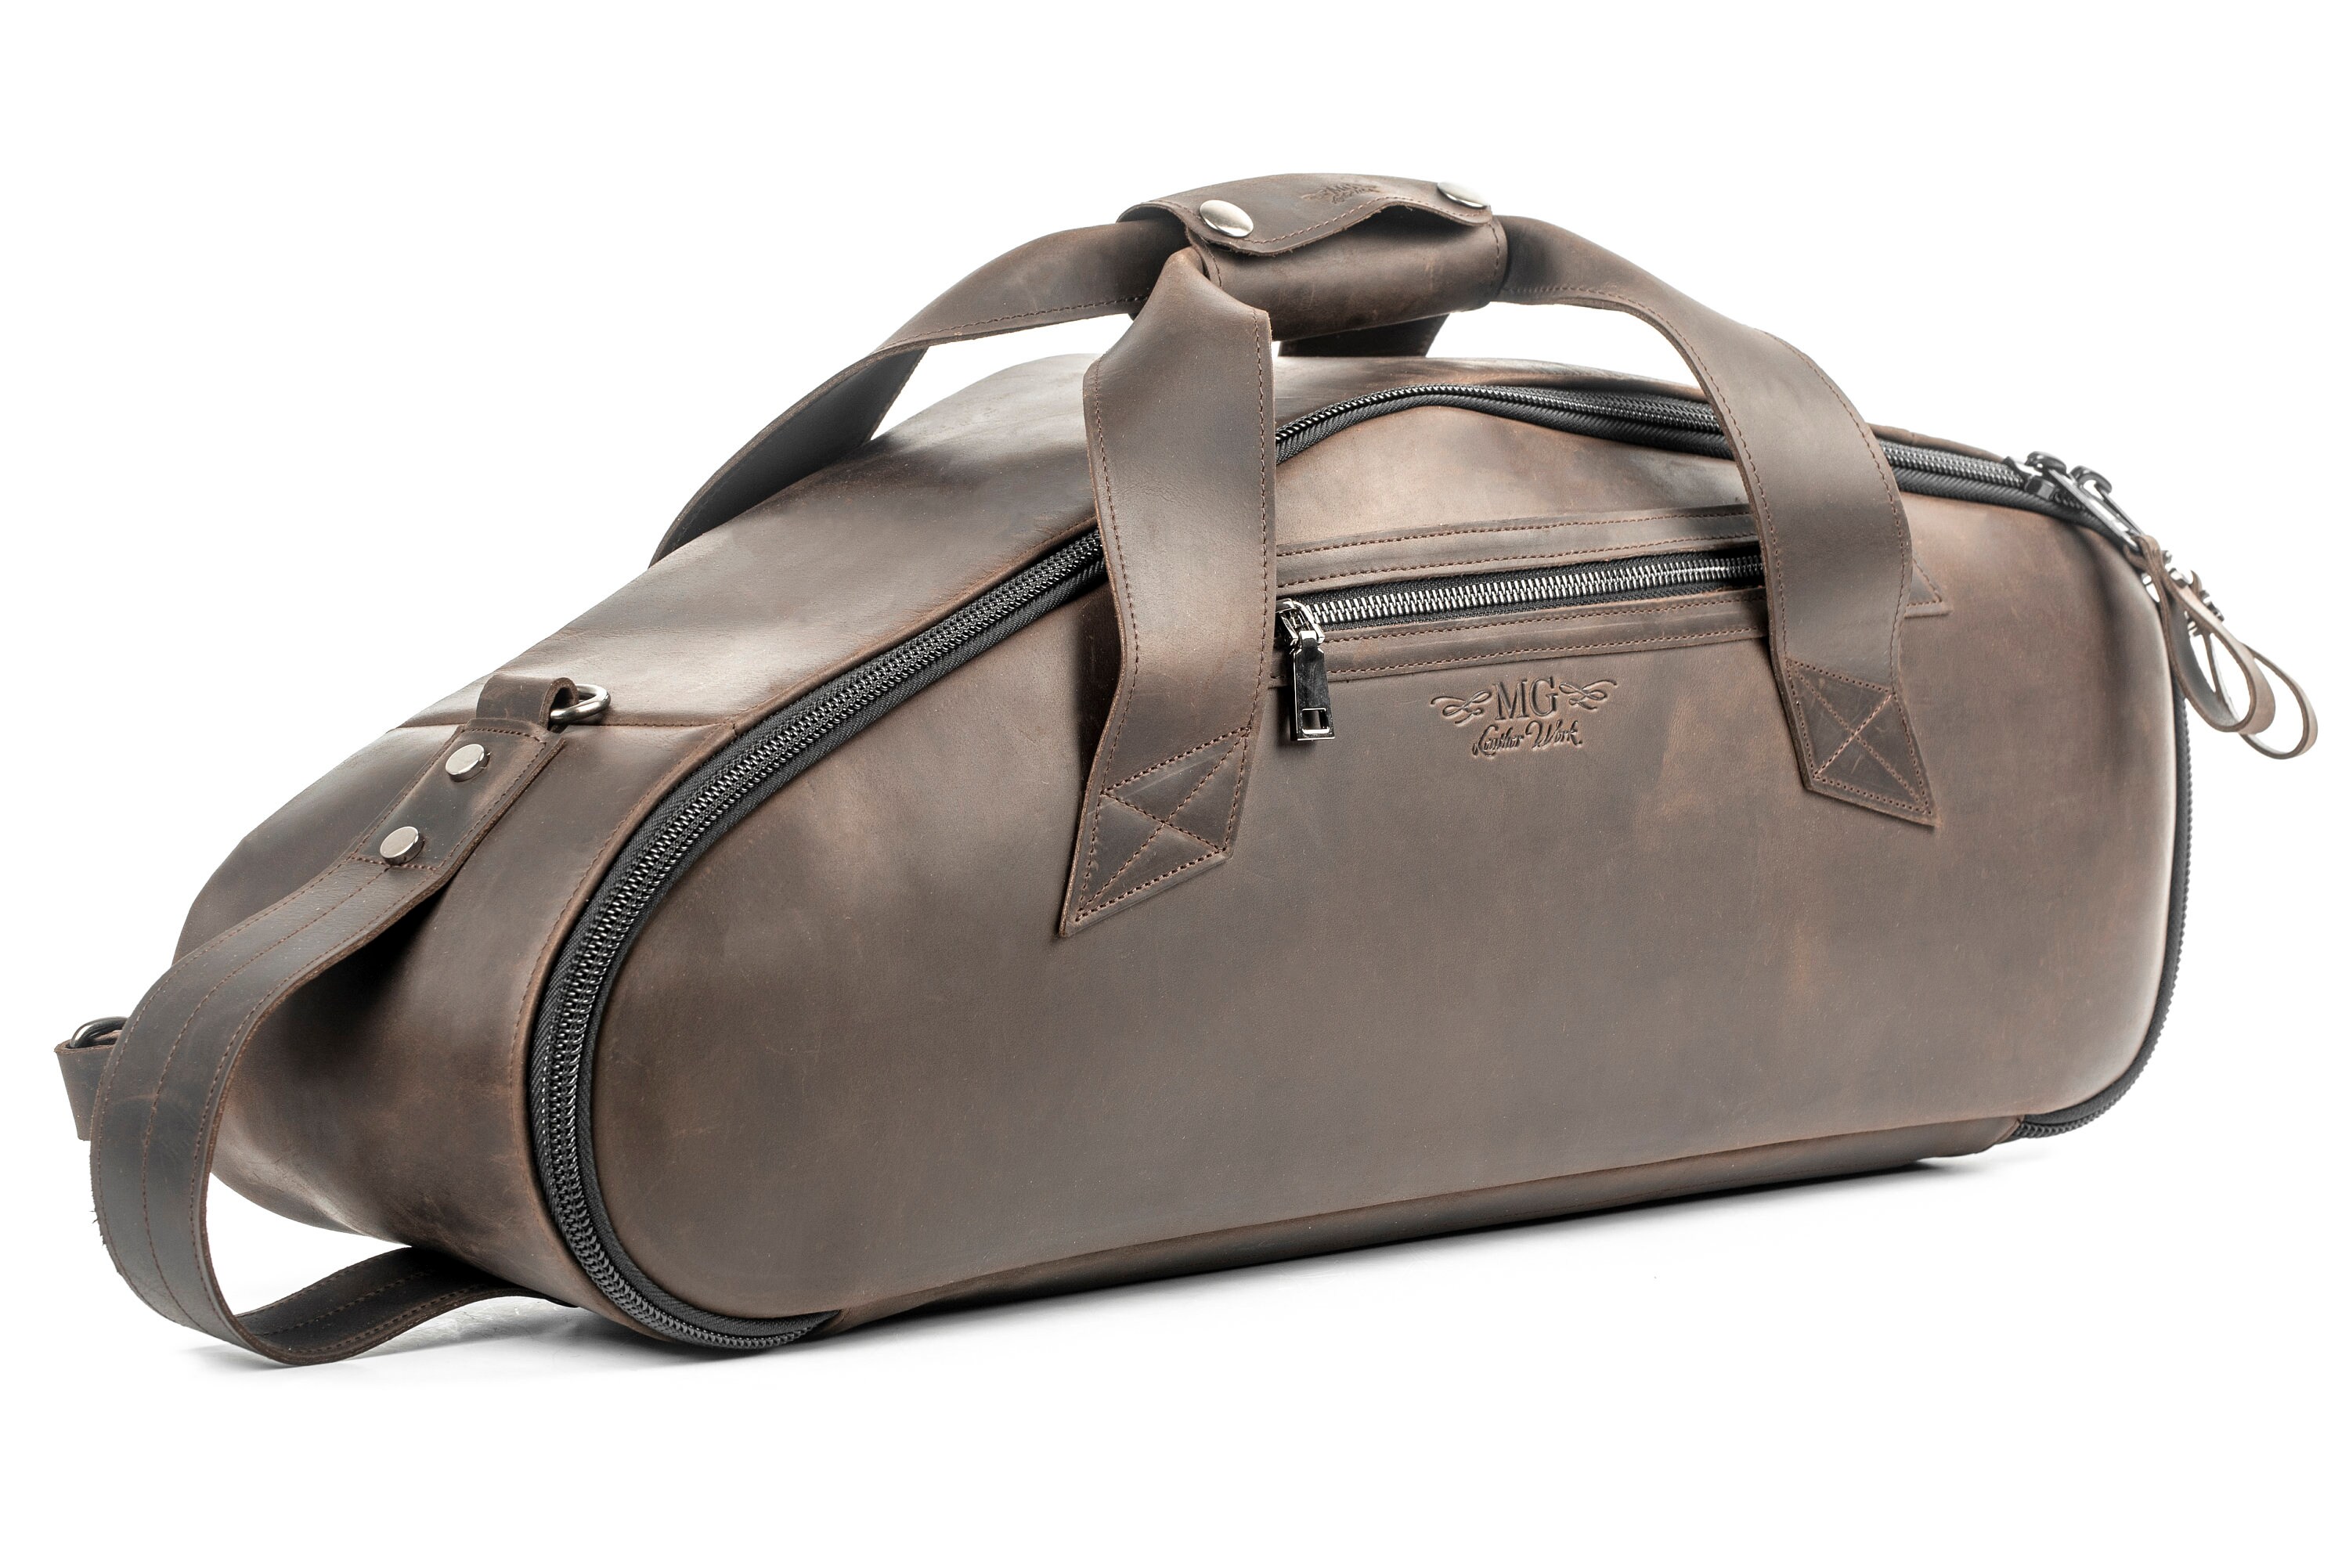 Chrome Azzaro Luggage Garment Bag Carry On Duffle | eBay